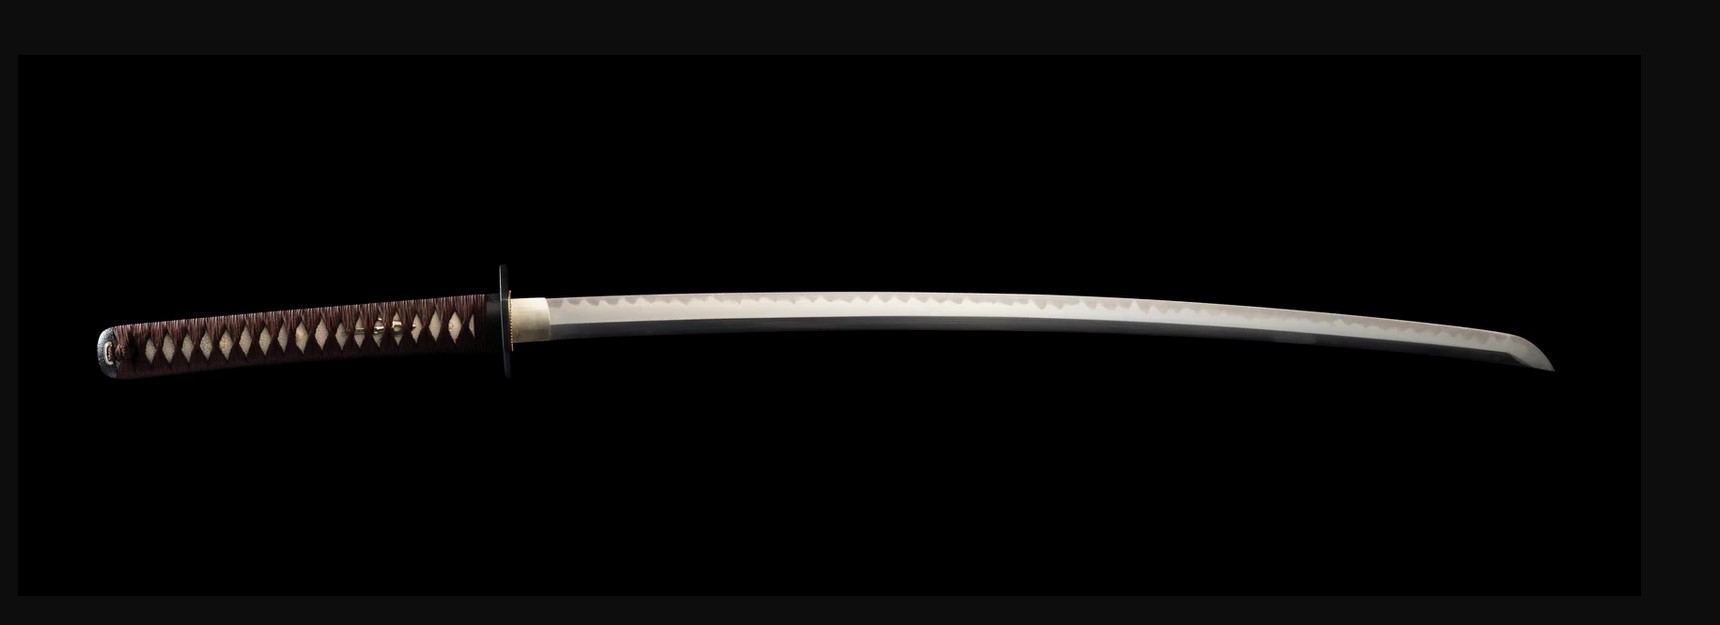 Amourer's Katana, 76,2 cm Klingenlänge, 33 cm Grifflänge